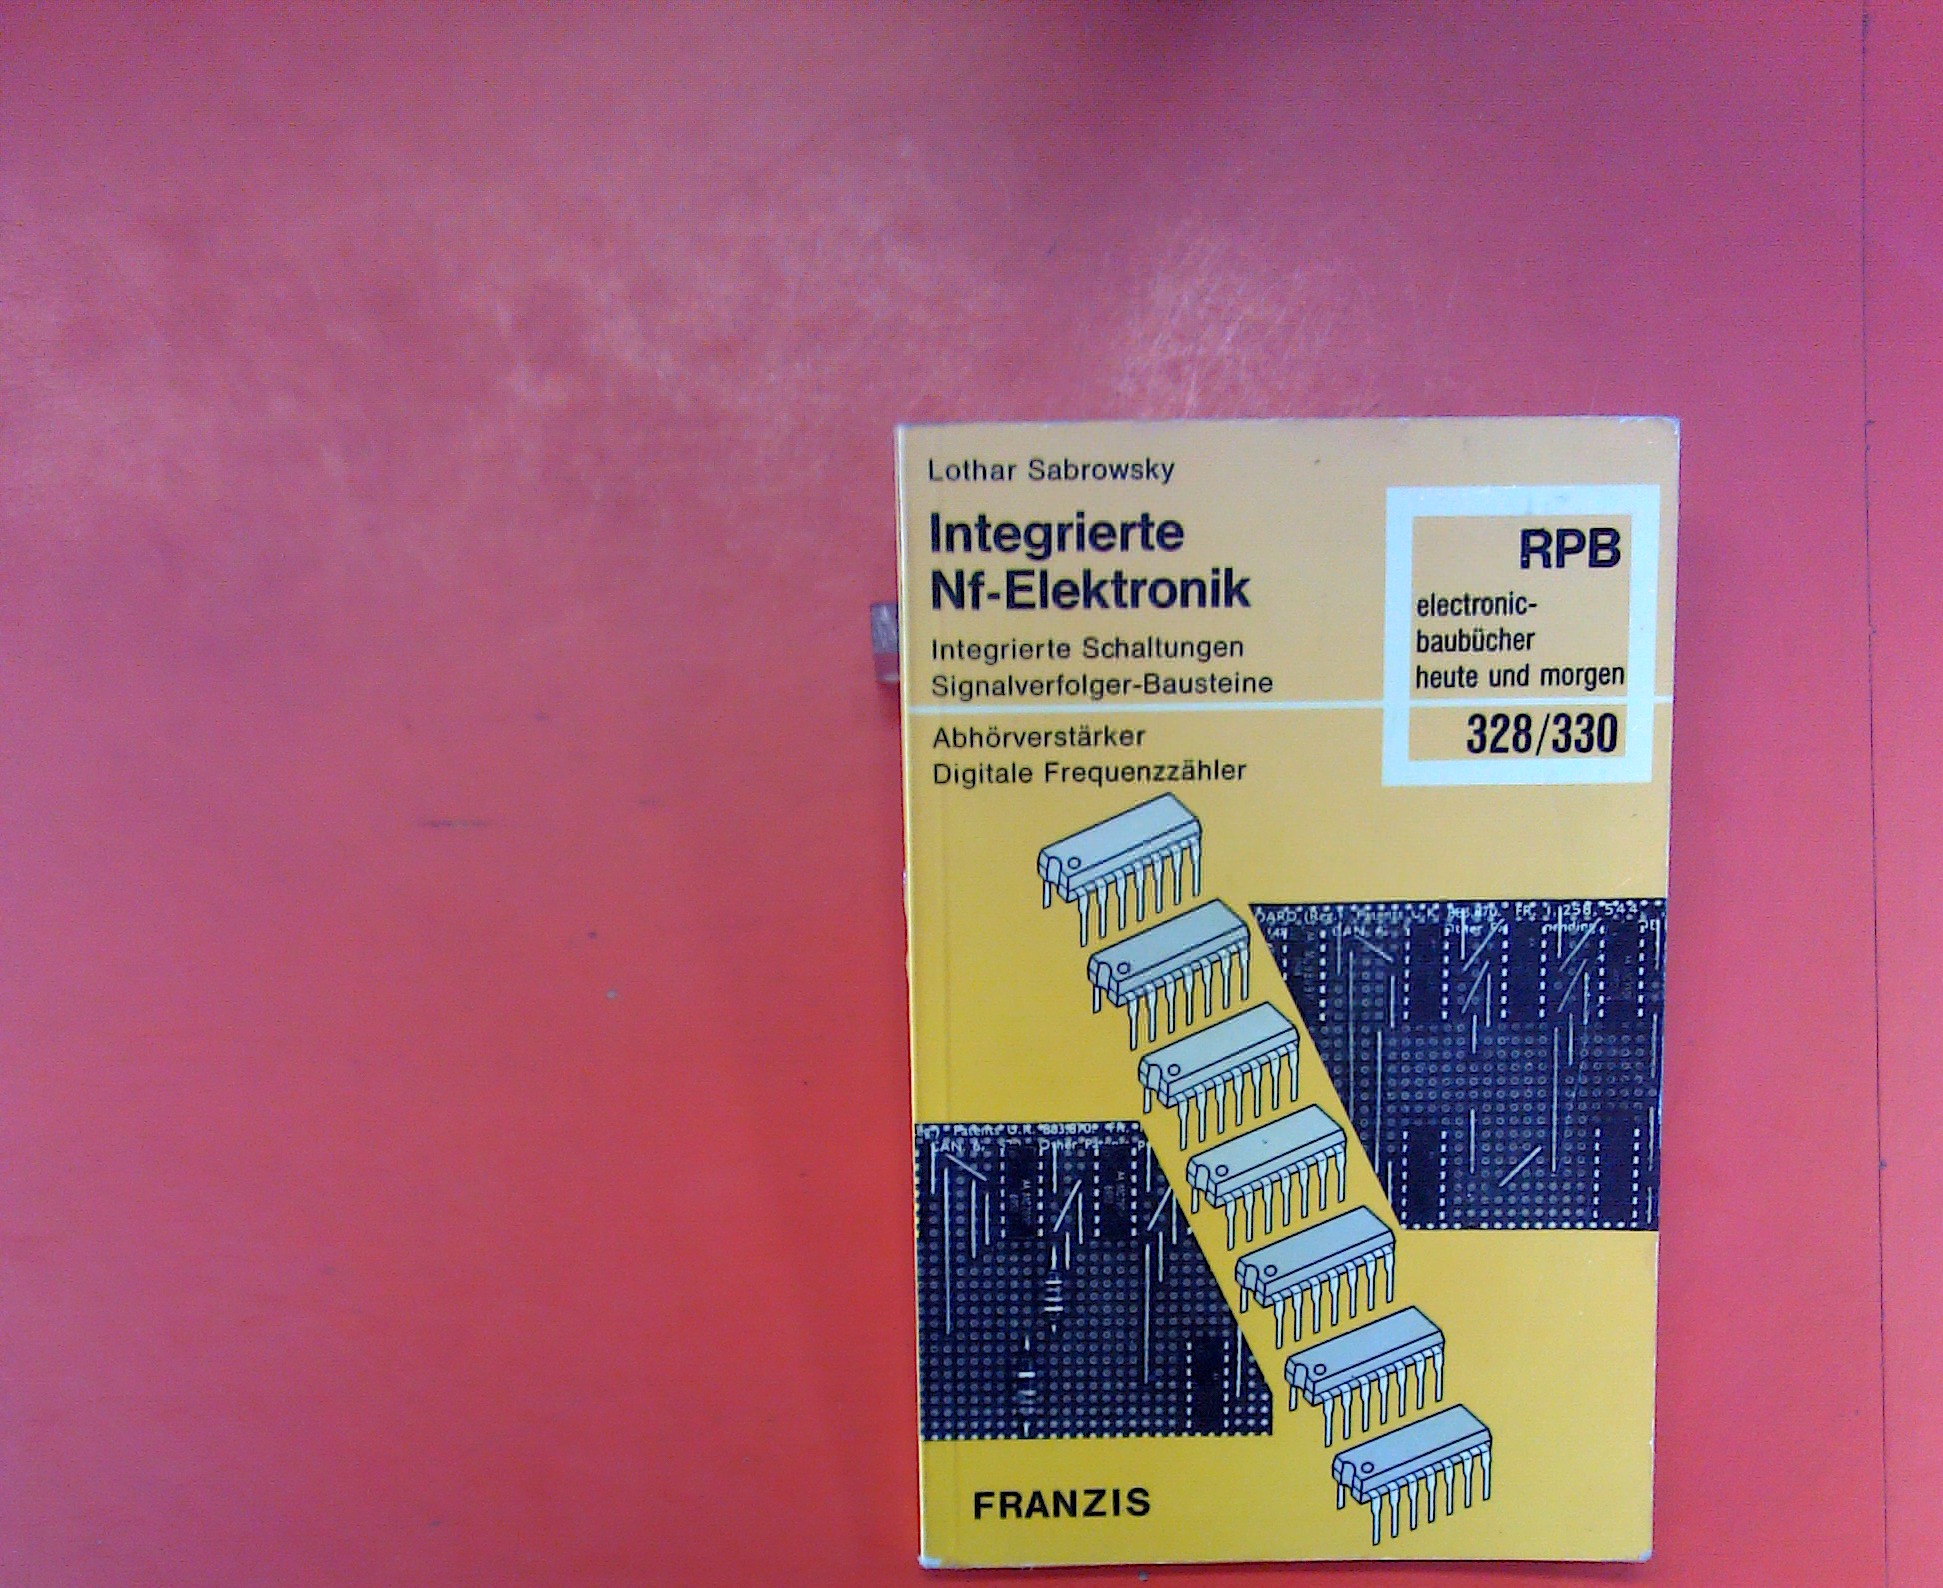 Integrierte Nf-Elektronik. RPB 328/330. - Lothar Sabrowsky